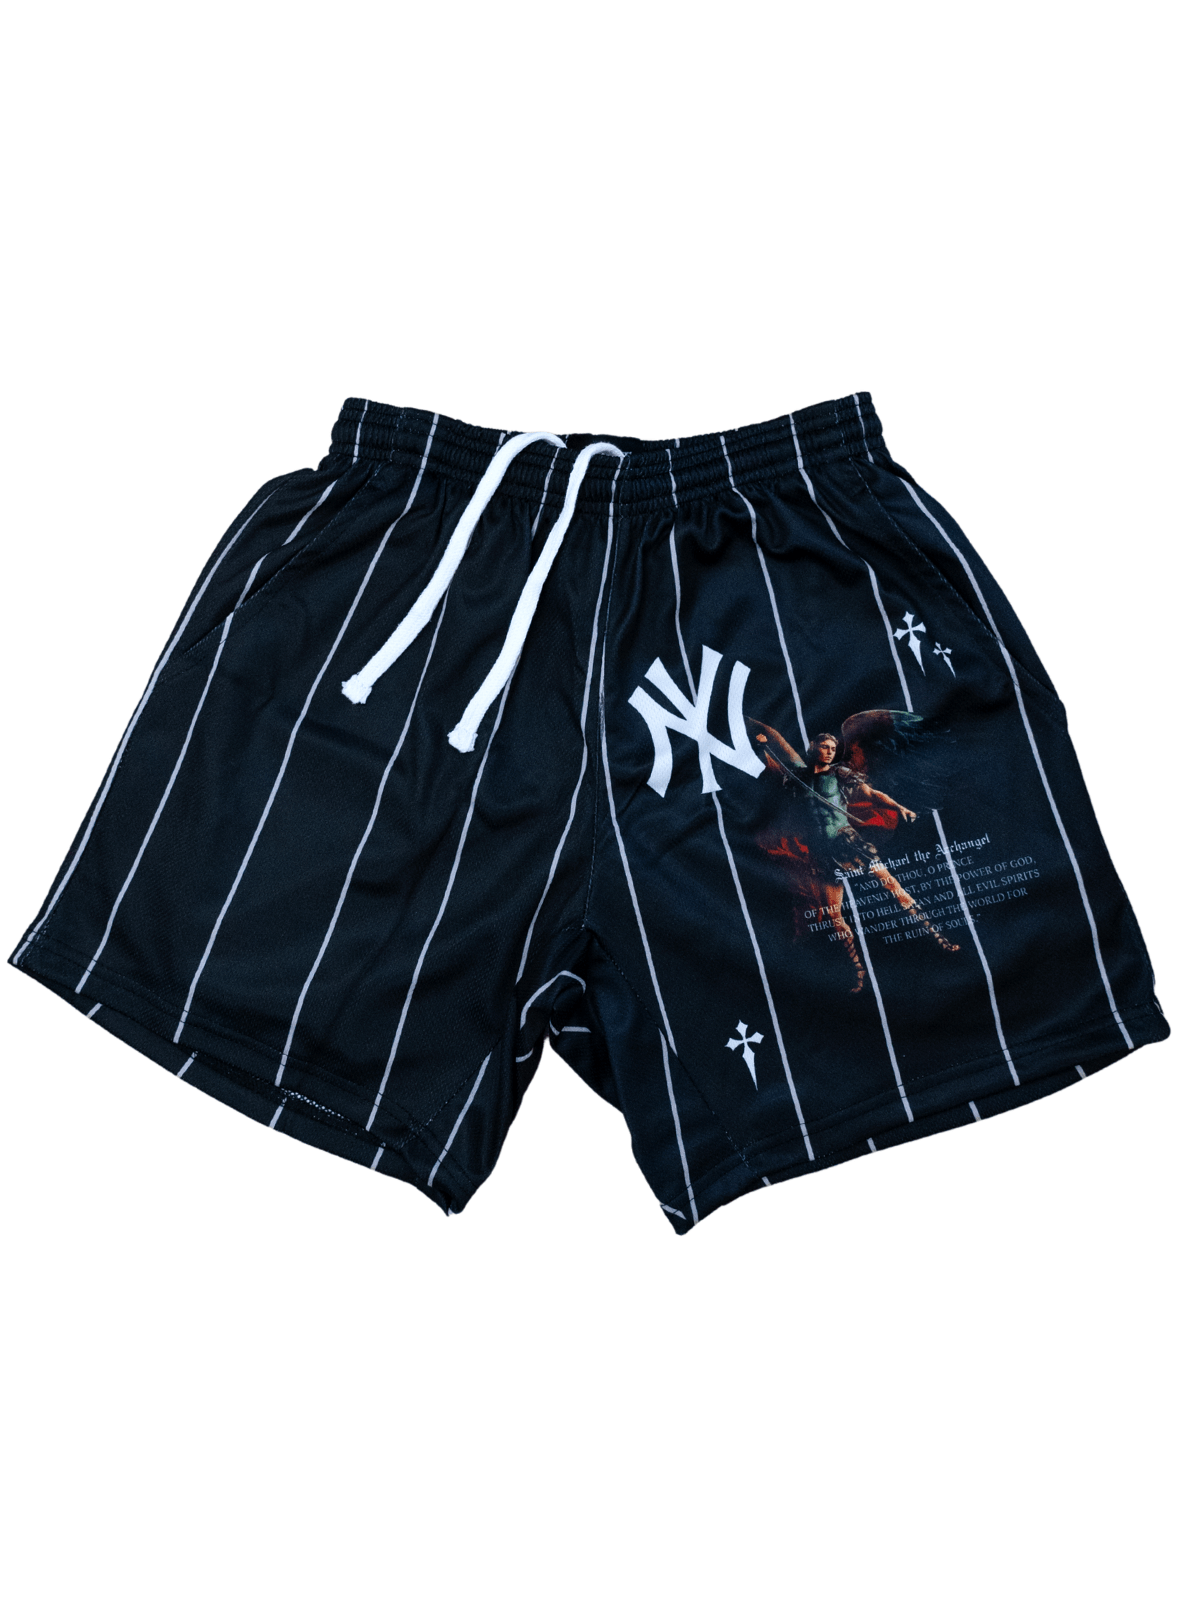 Inferno: Striped Shorts